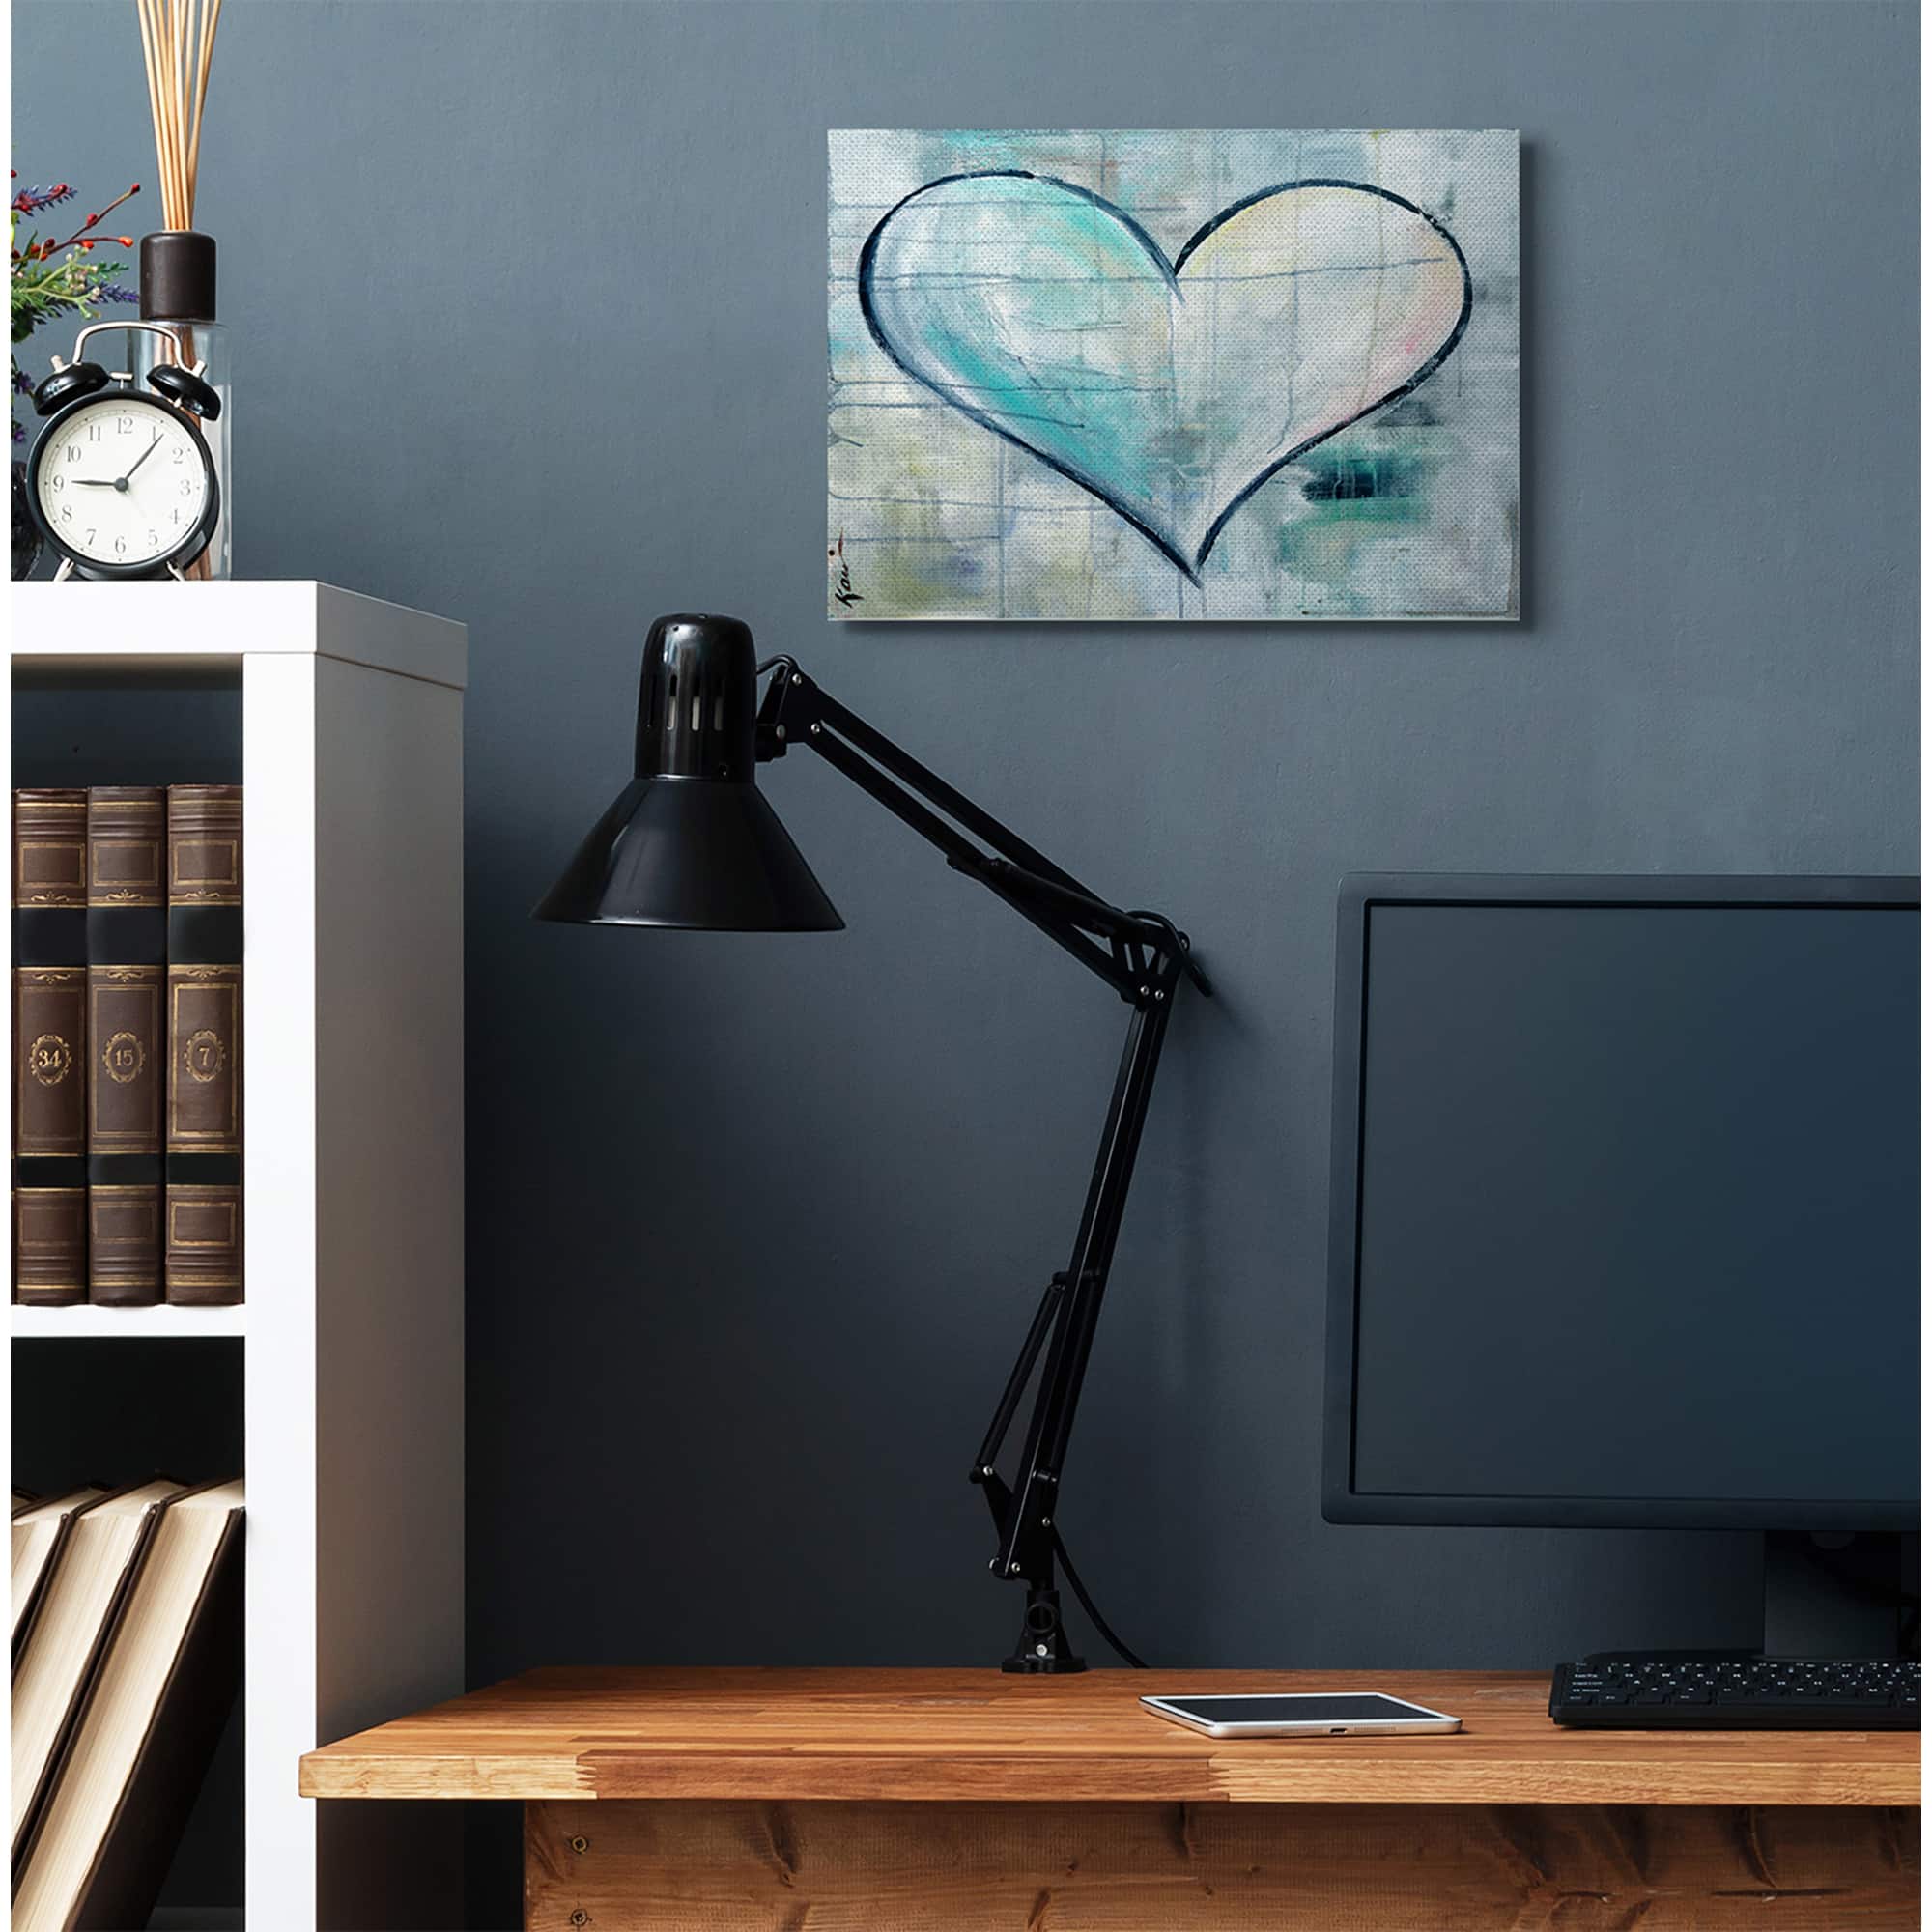 Stupell Industries Blue &#x26; White Graffiti Heart Painting Canvas Wall Art